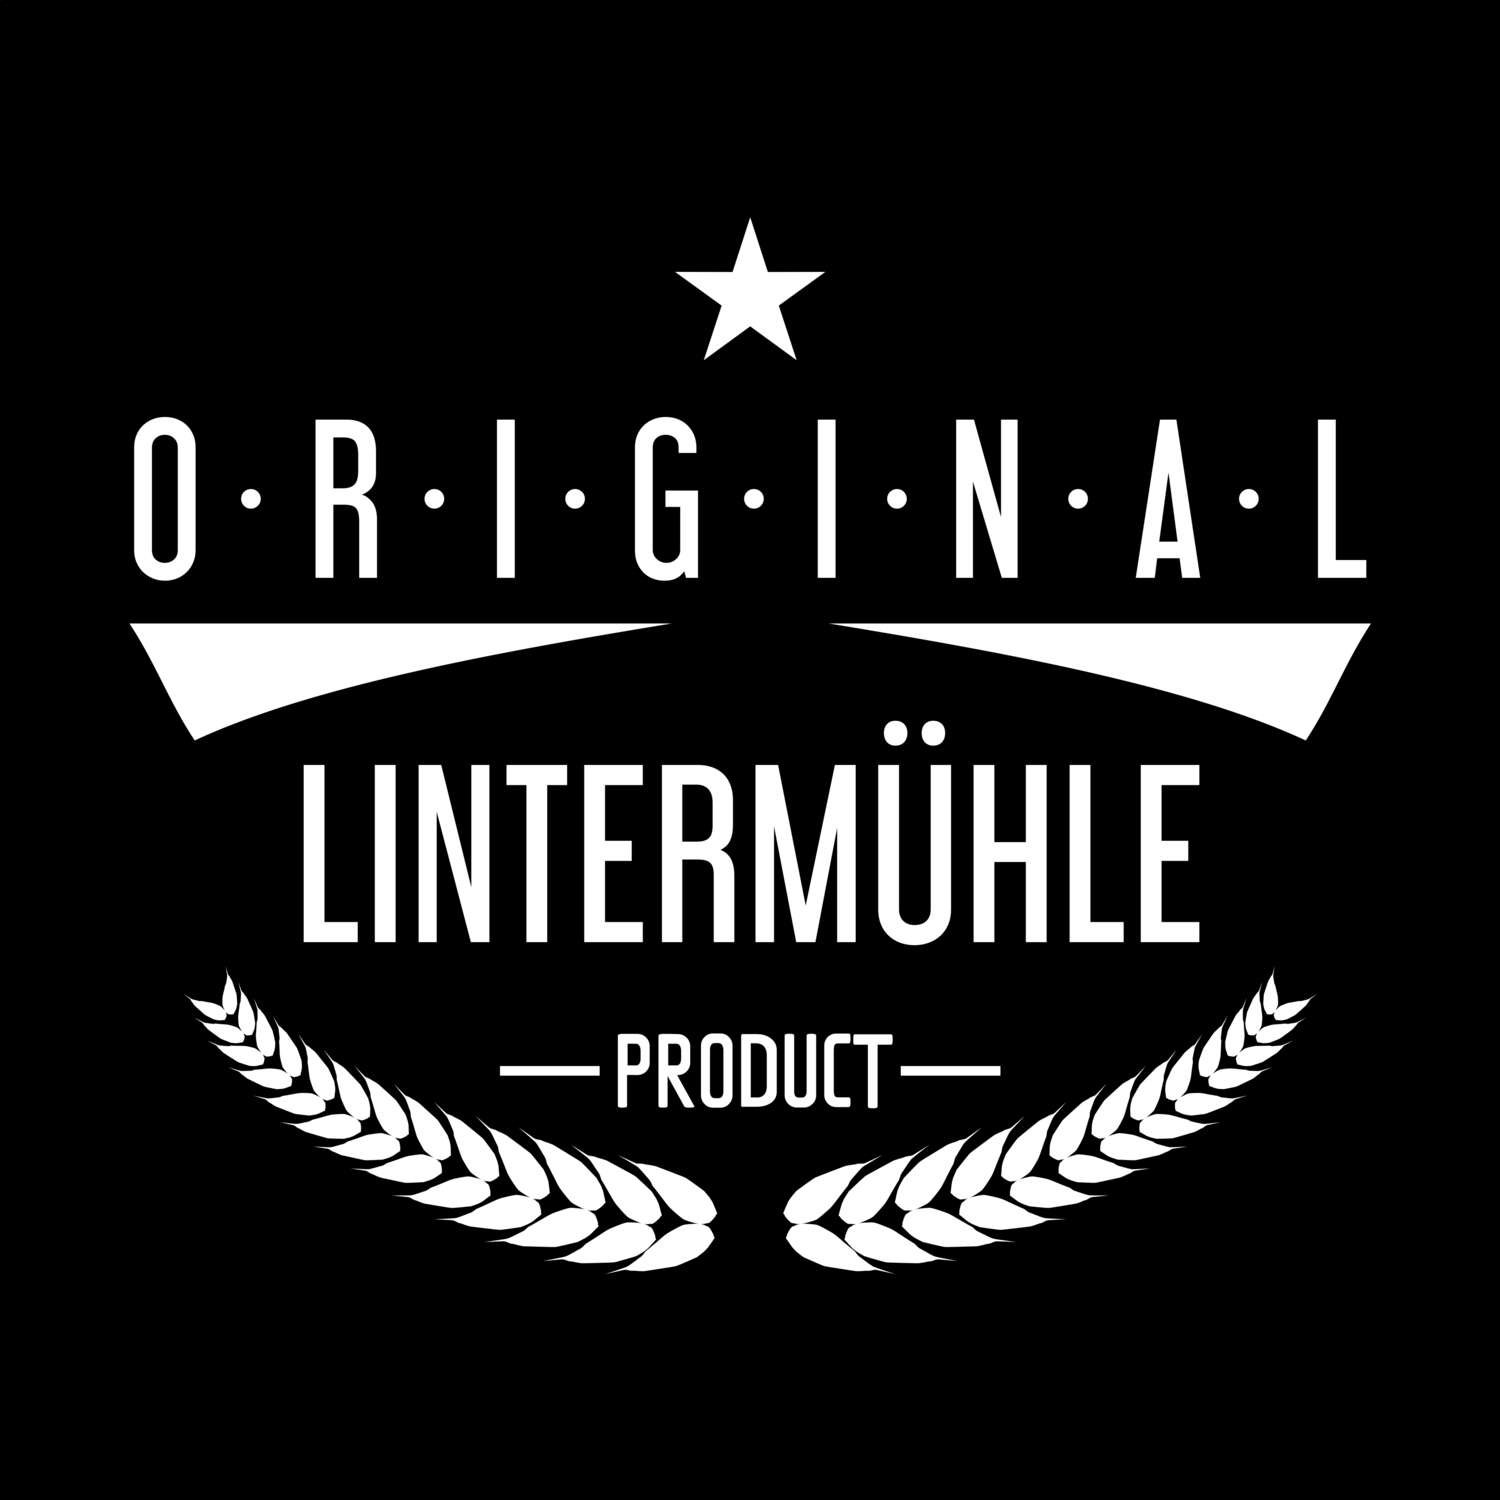 Lintermühle T-Shirt »Original Product«